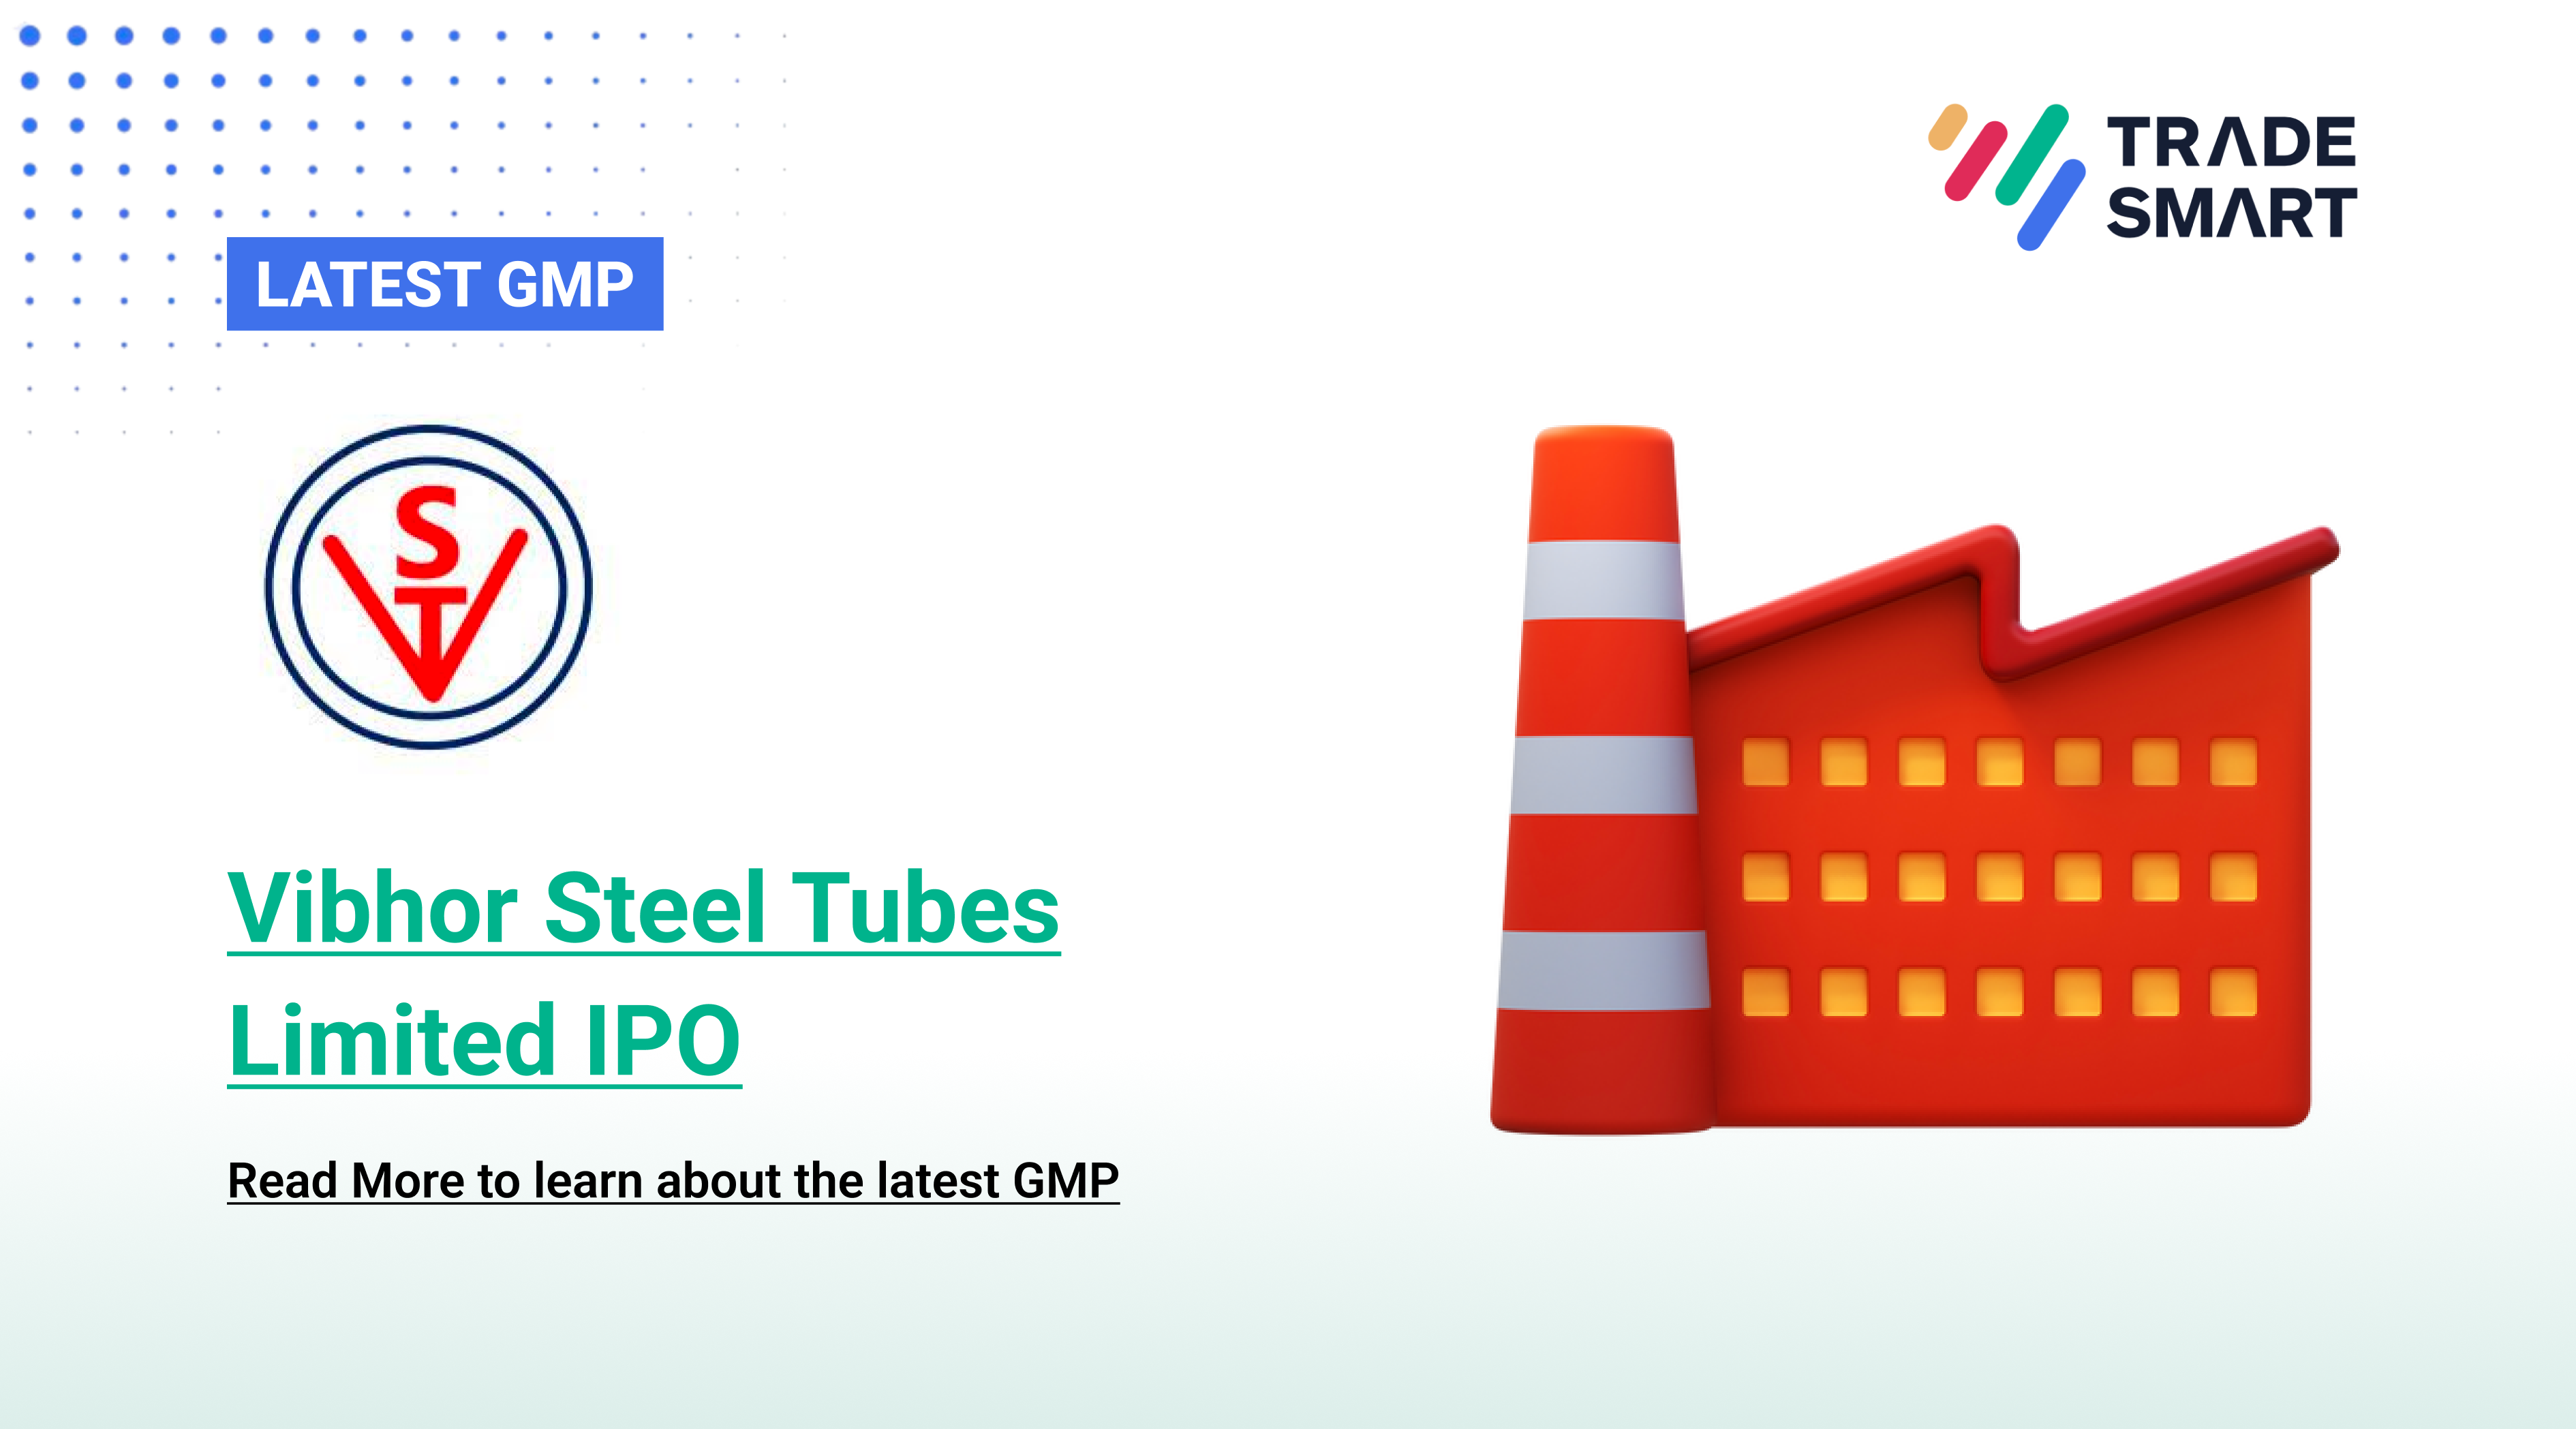 Vibhor Steel Tubes IPO GMP